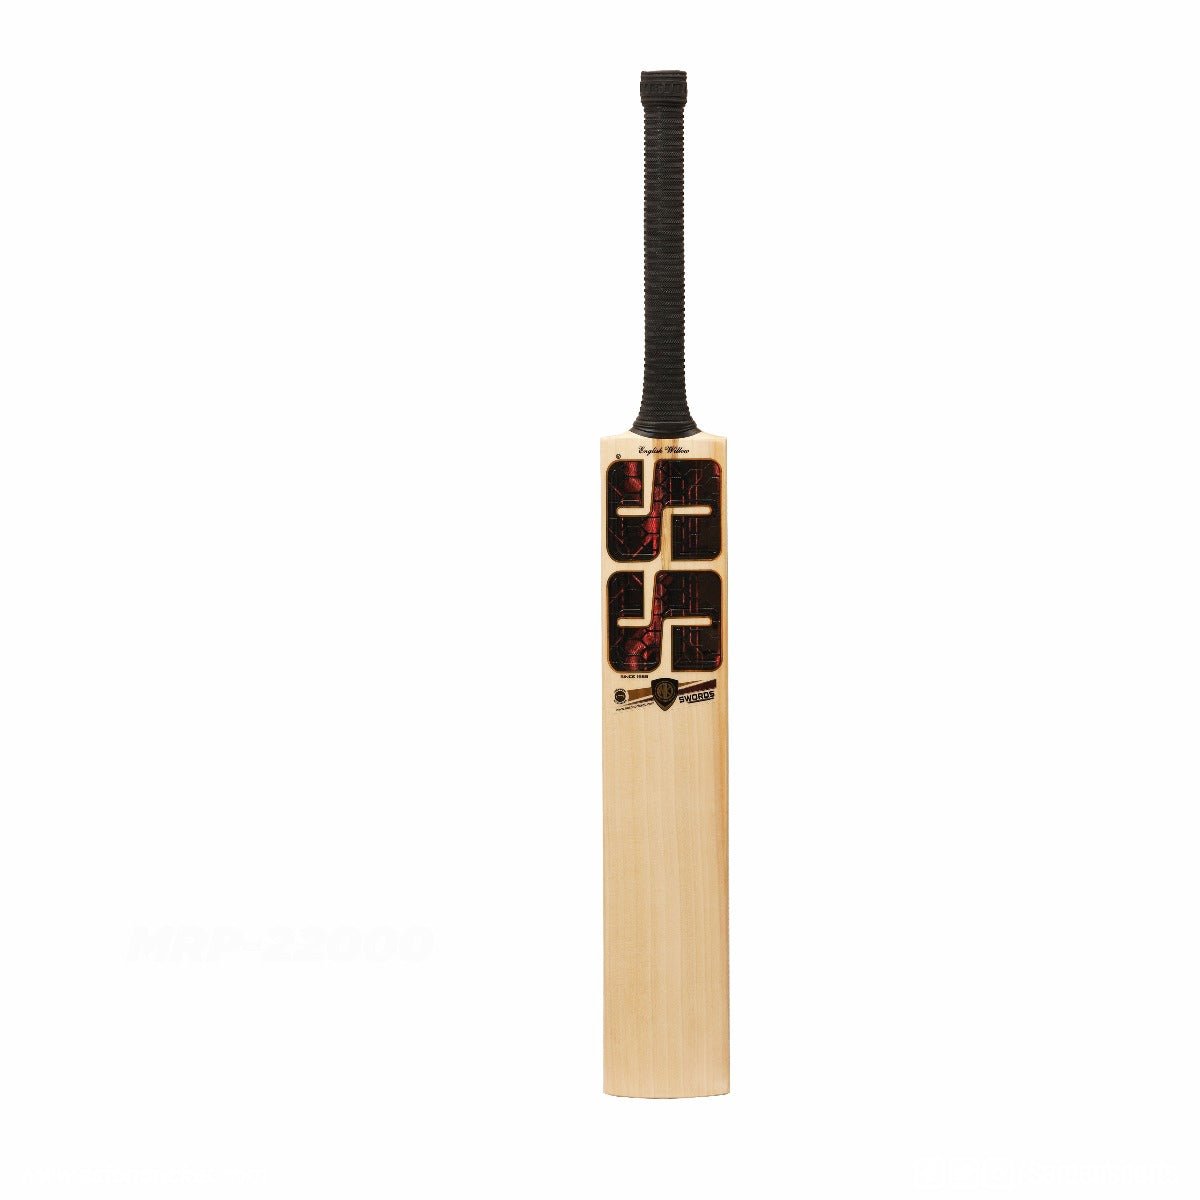 SS Sword Pro English Willow Cricket Bat SH - Acrux Sports